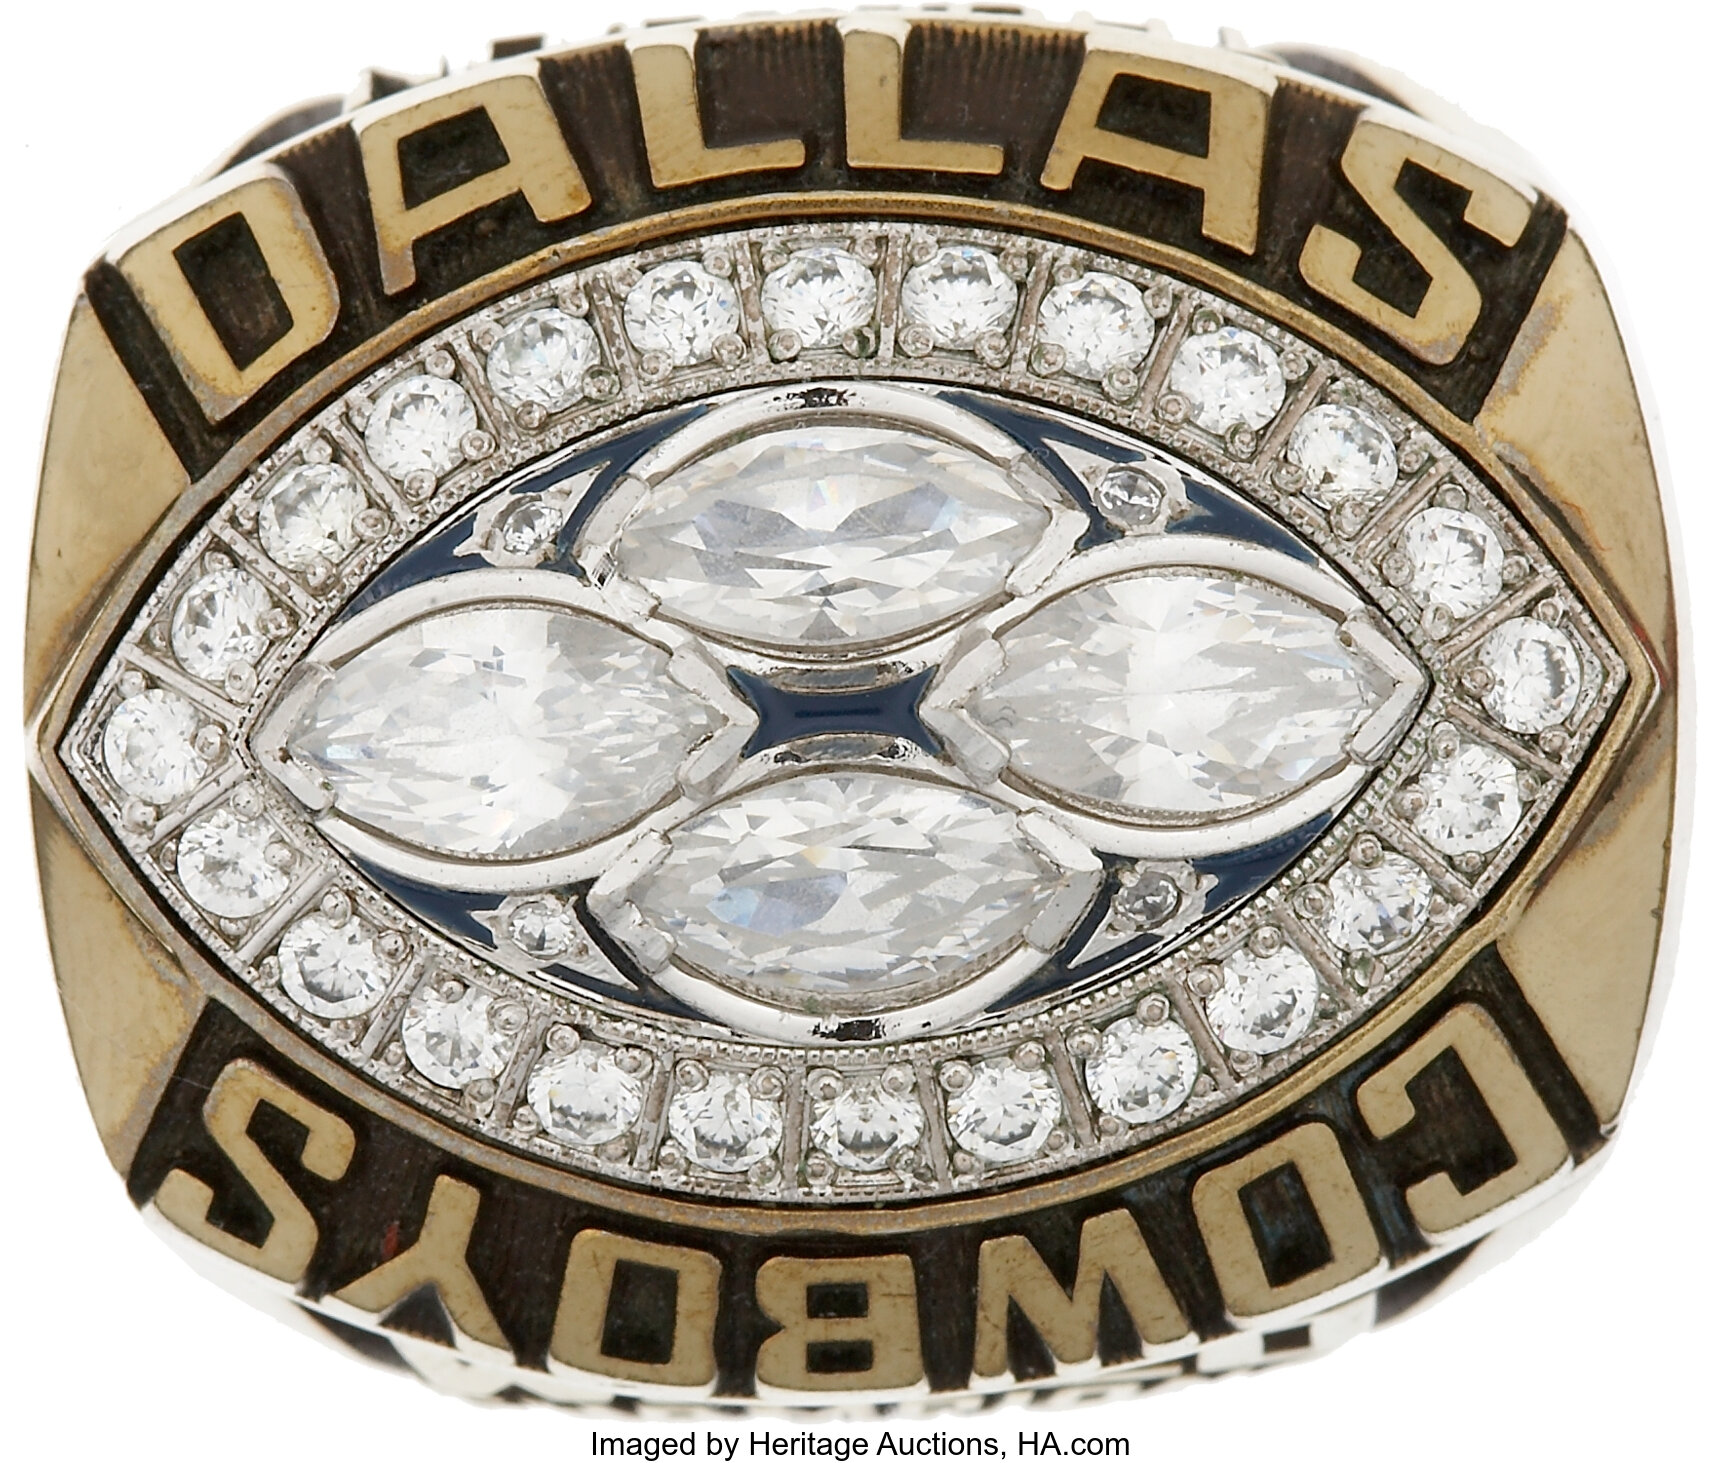 1993 Dallas Cowboys Super Bowl XXVIII Championship Ring.